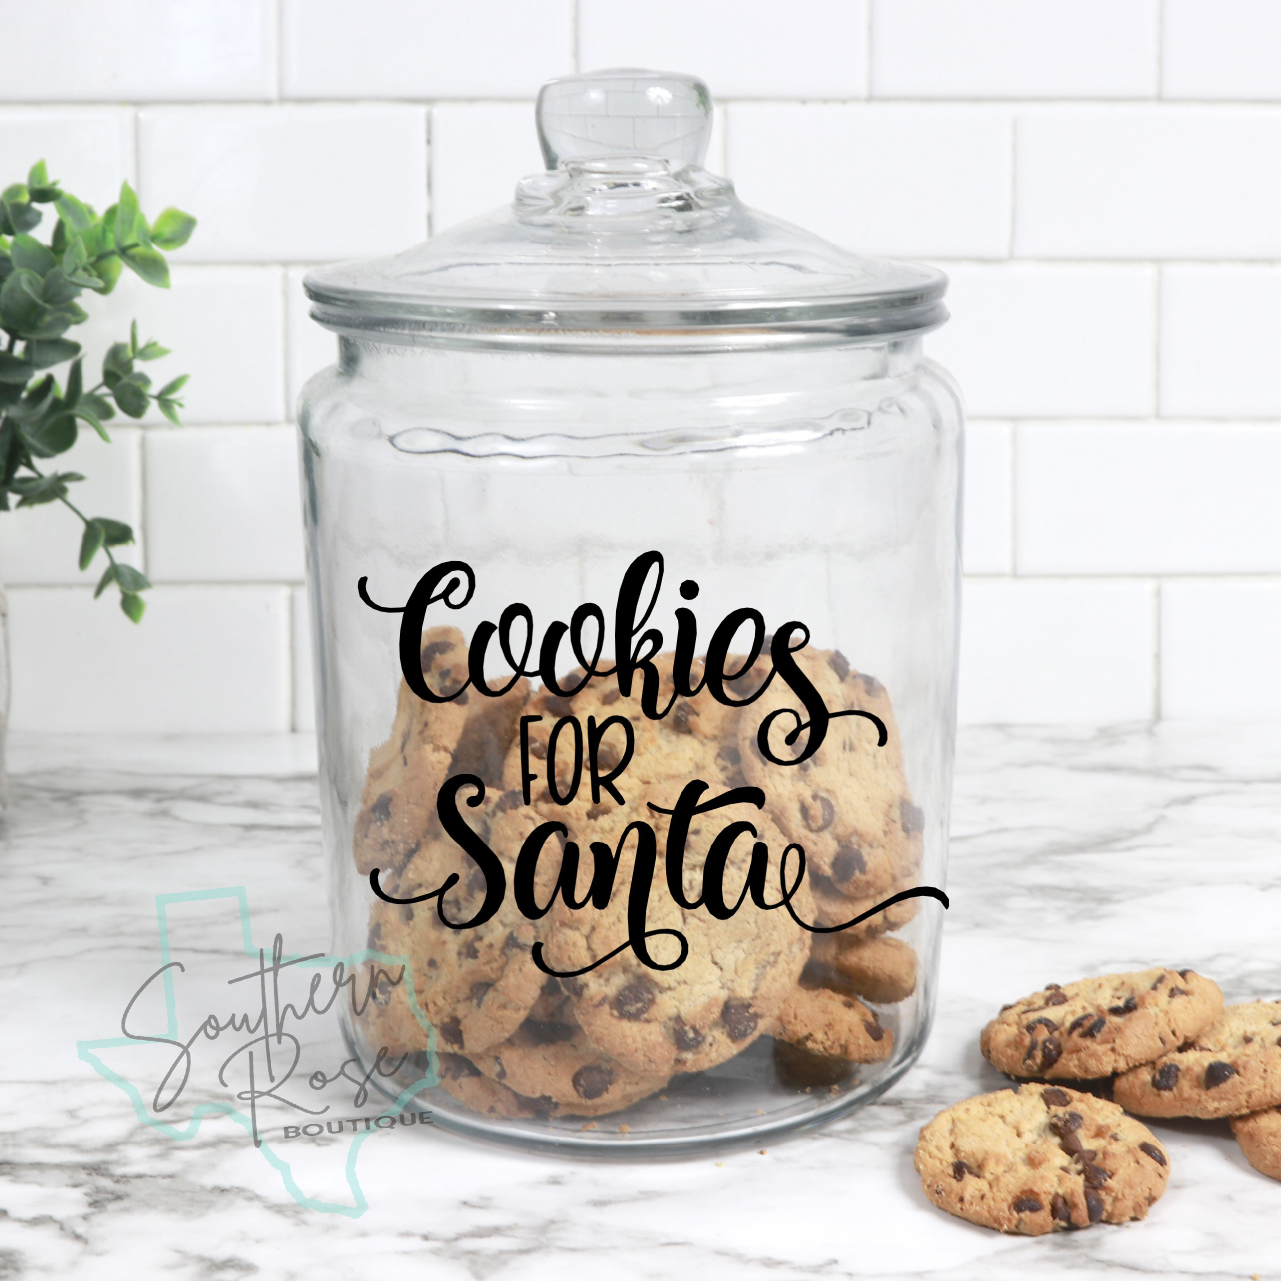 Cookies for Santa Decal